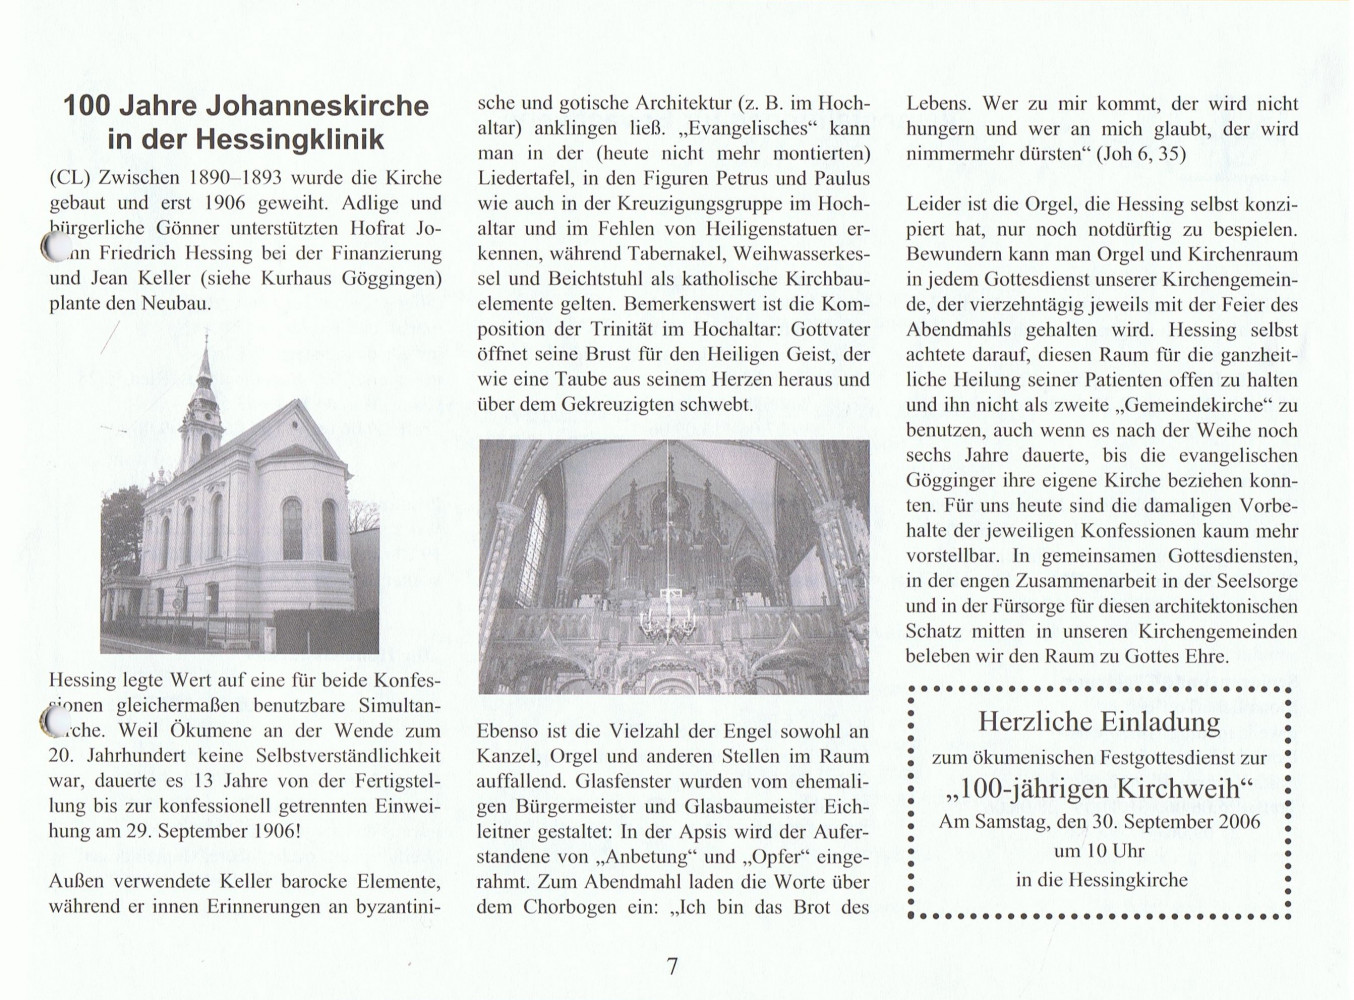 100 Jahre Hessingkirche